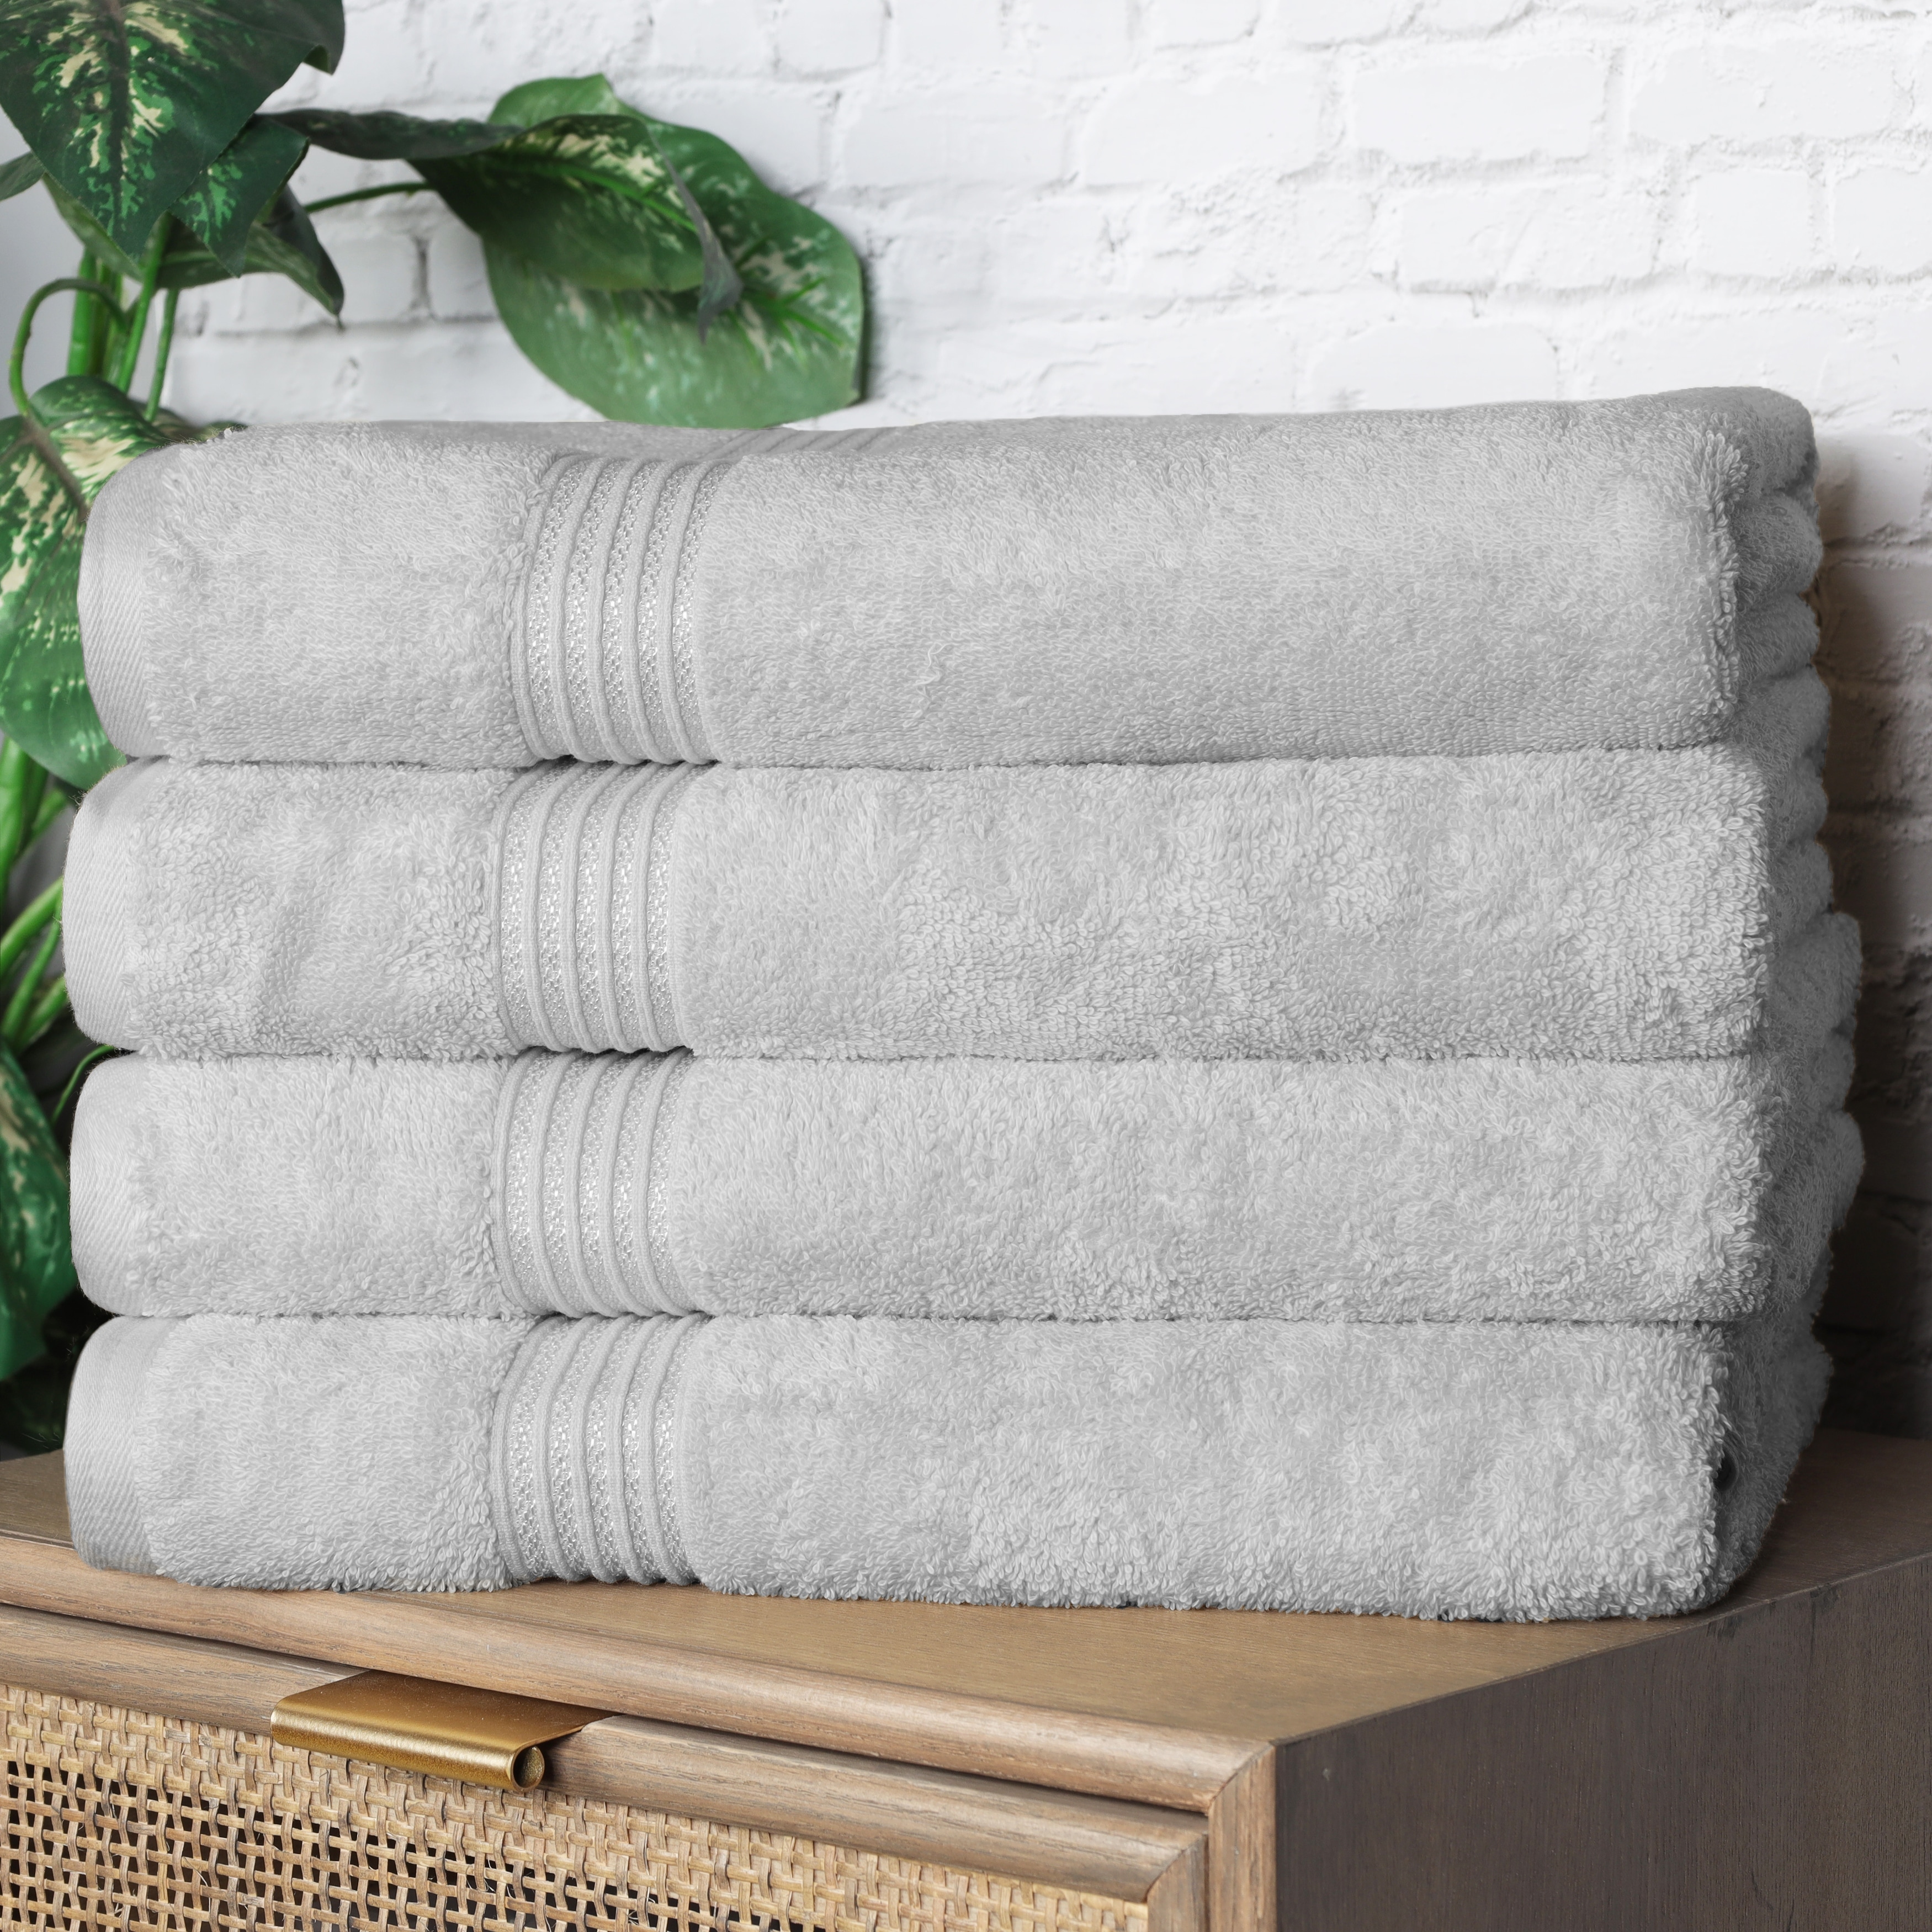 Superior Egyptian Cotton Absorbent Medium Weight Towel - (Set of 4